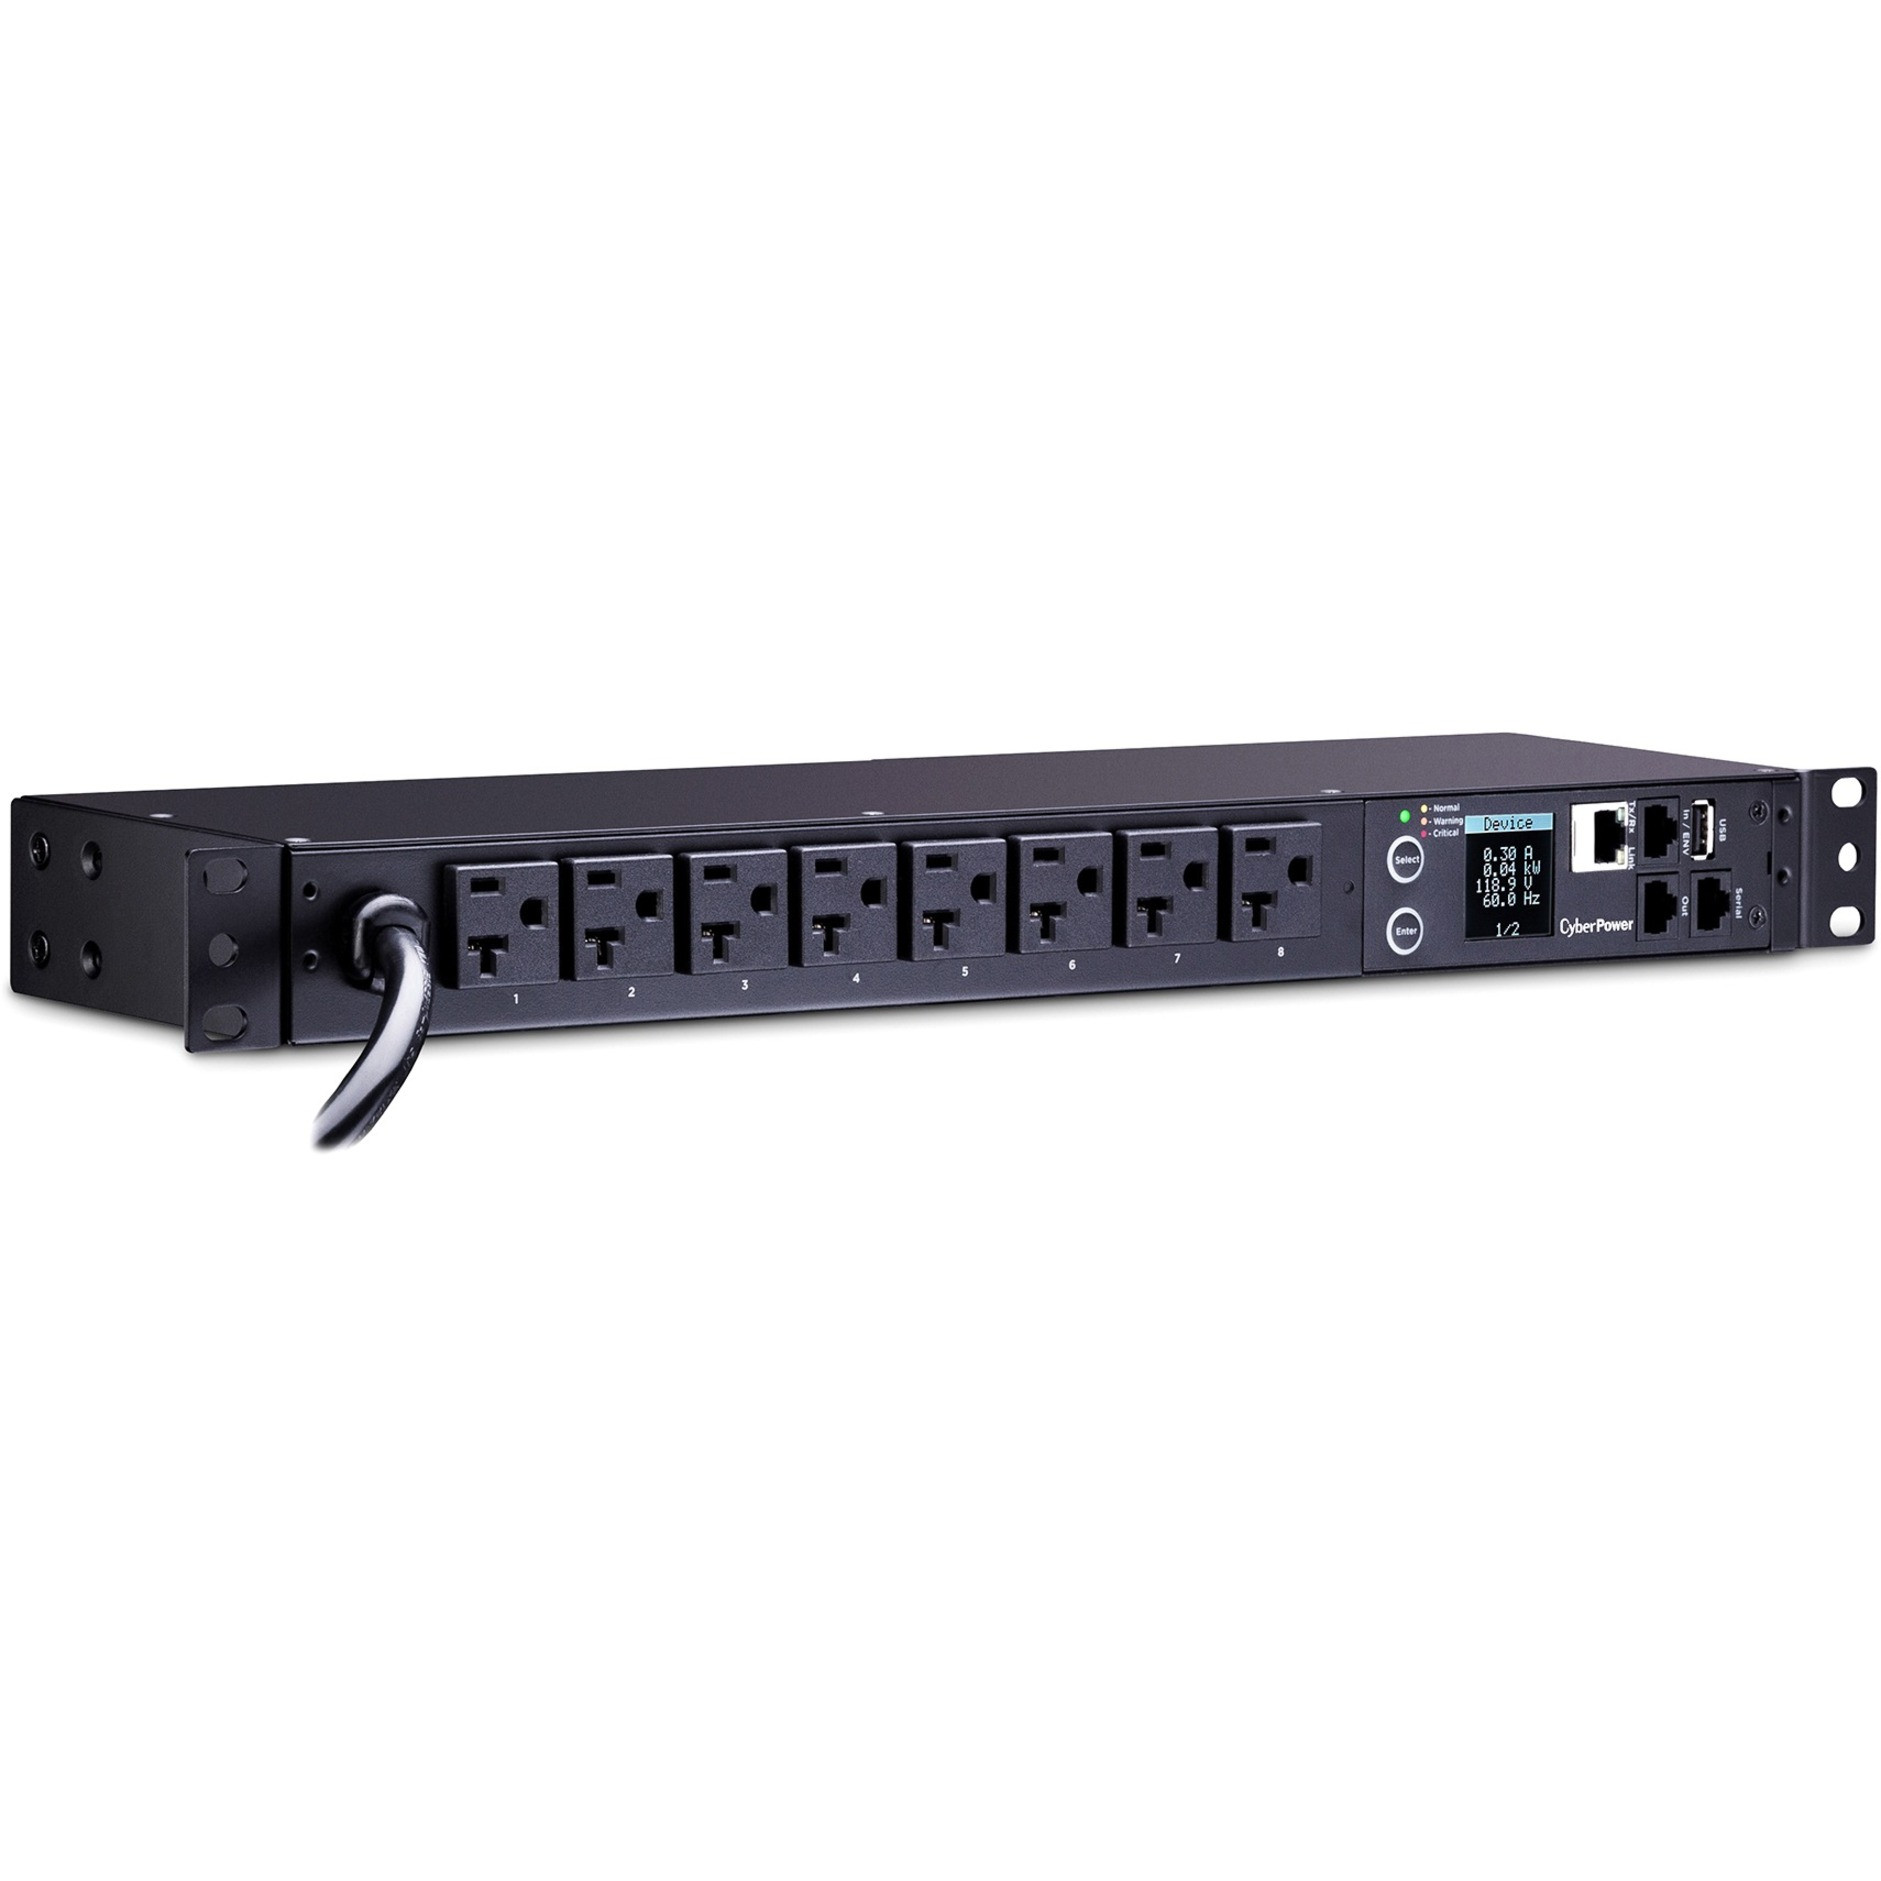 Cyber Power PDU31002 100120 VAC 20A Monitored PDU8 Outlets, 12 ft, NEMA L5-20P (5-20P Adapter), Horizontal, 1U, LCD,  Warranty PDU31002